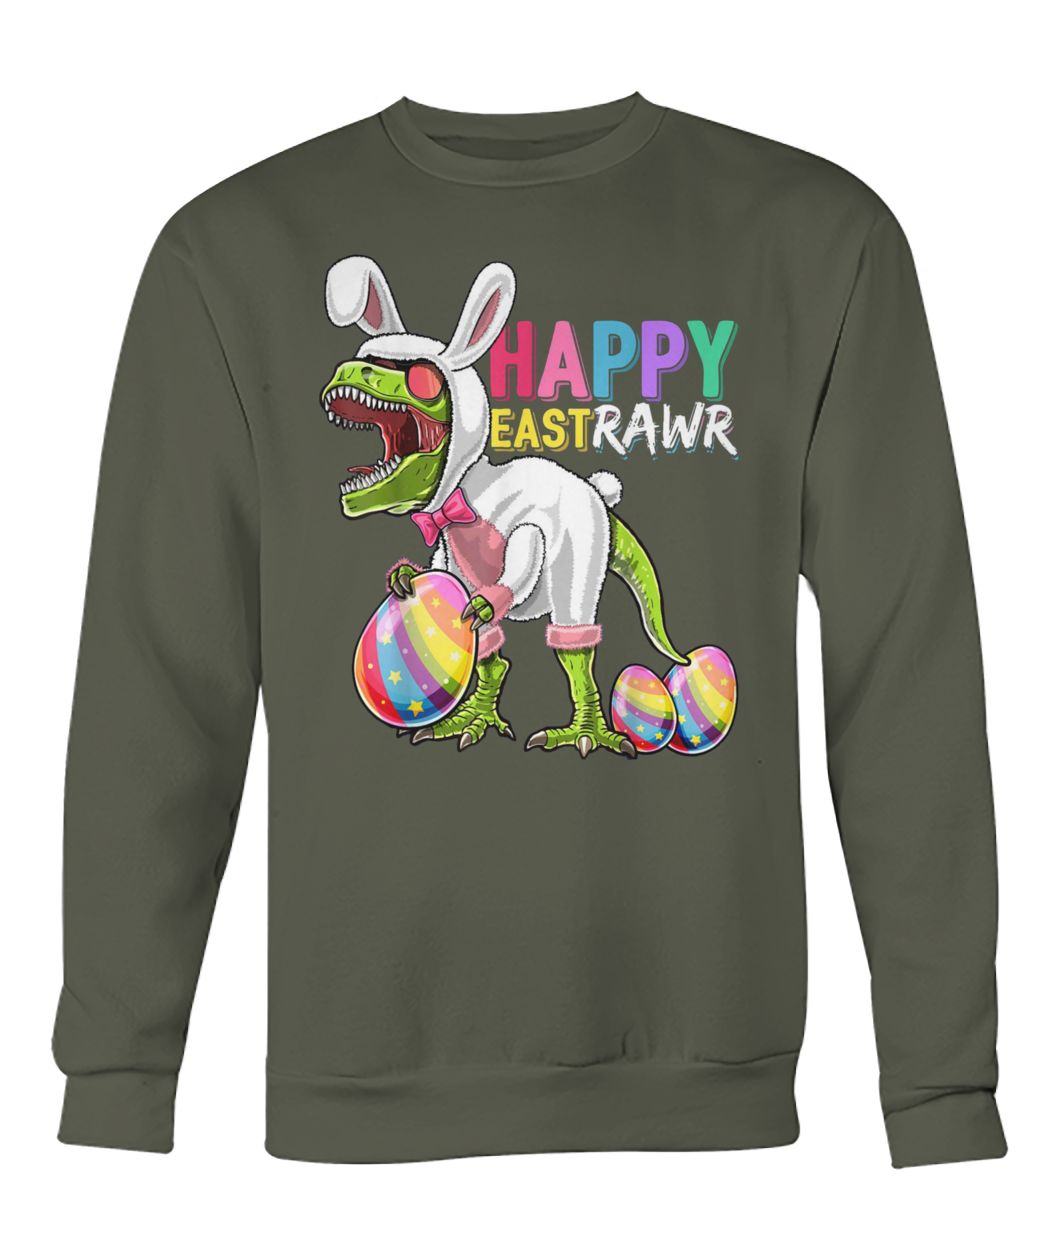 Happy eastrawr t-rex dinosaur easter bunny egg crew neck sweatshirt